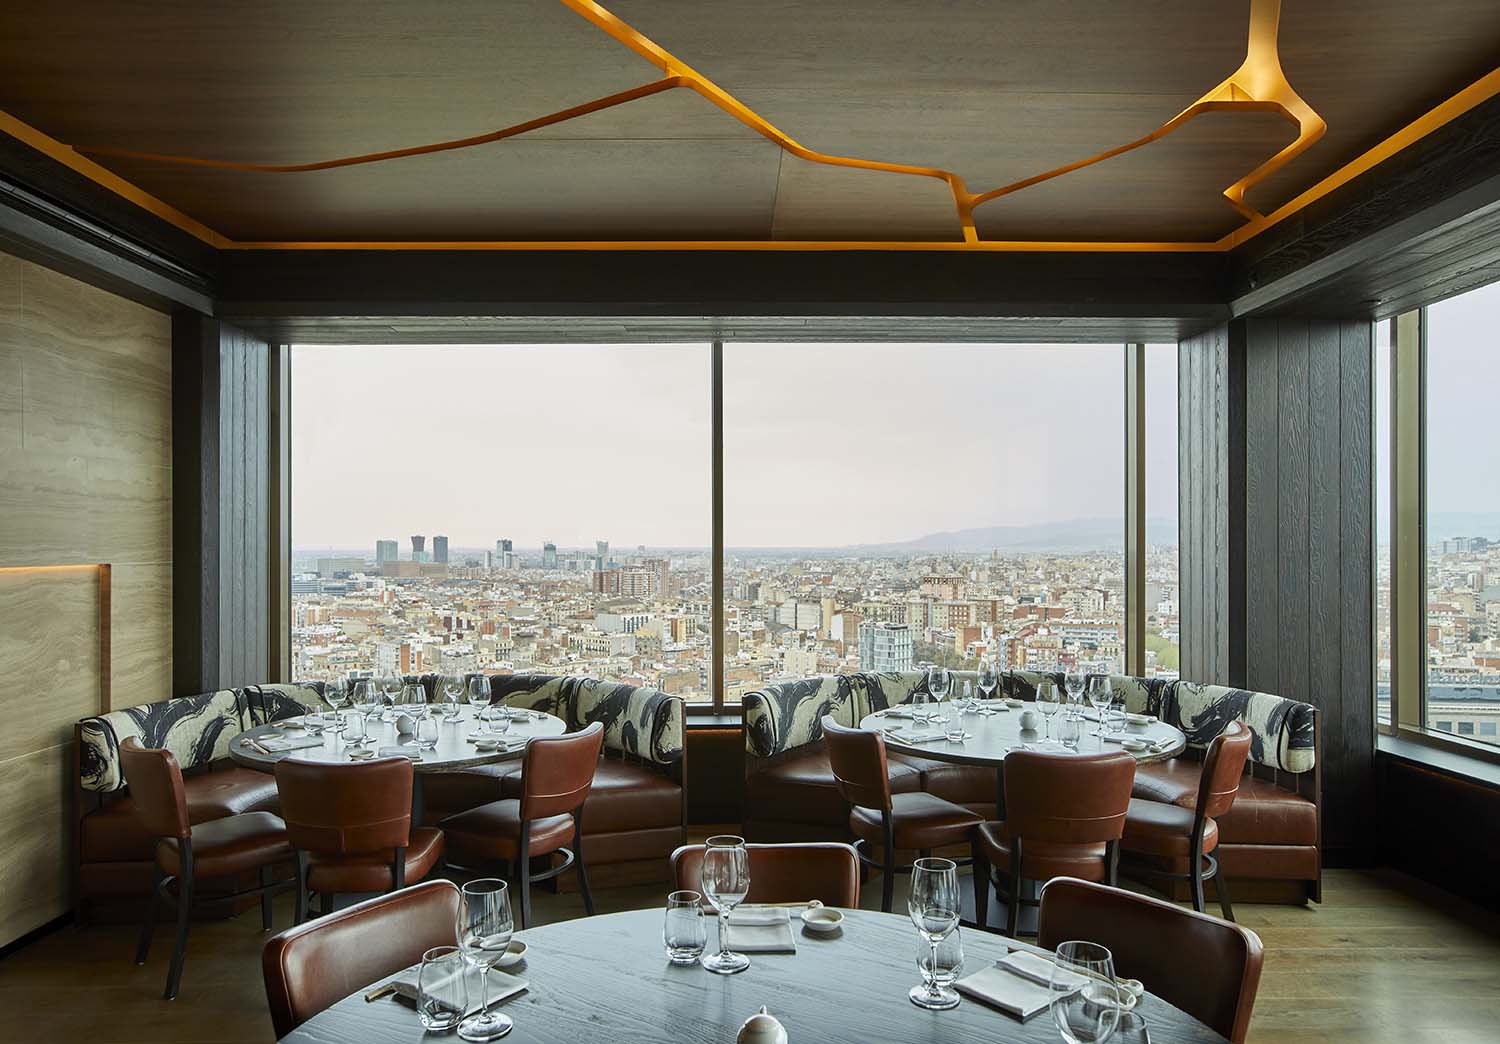 Nobu Barcelona Design Hotel and Restaurant Designed by Rockwell Group